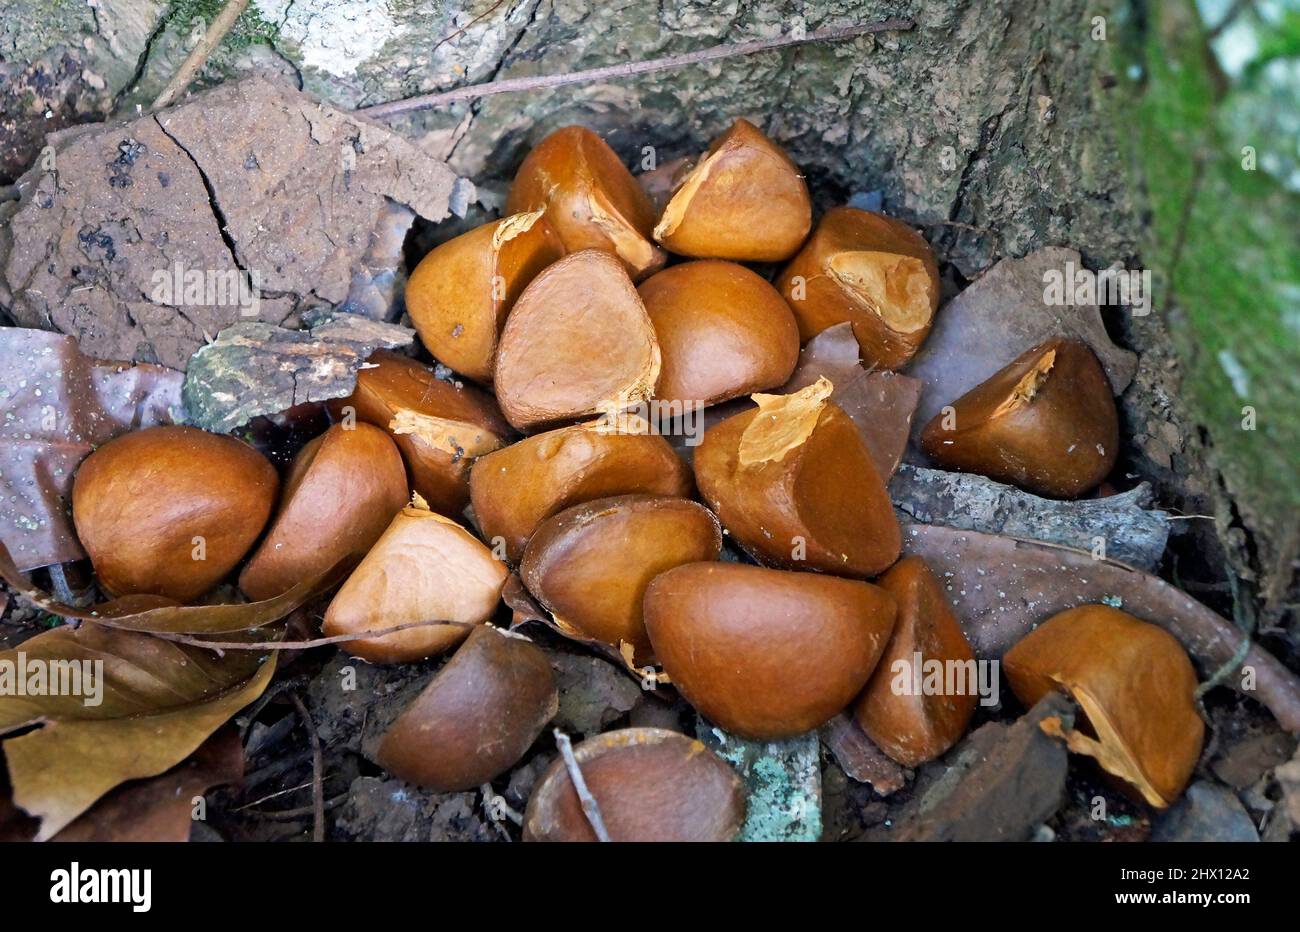 Crabwood tree seed or Andiroba seed (Carapa guianensis) on soil, Rio, Brazil Stock Photo